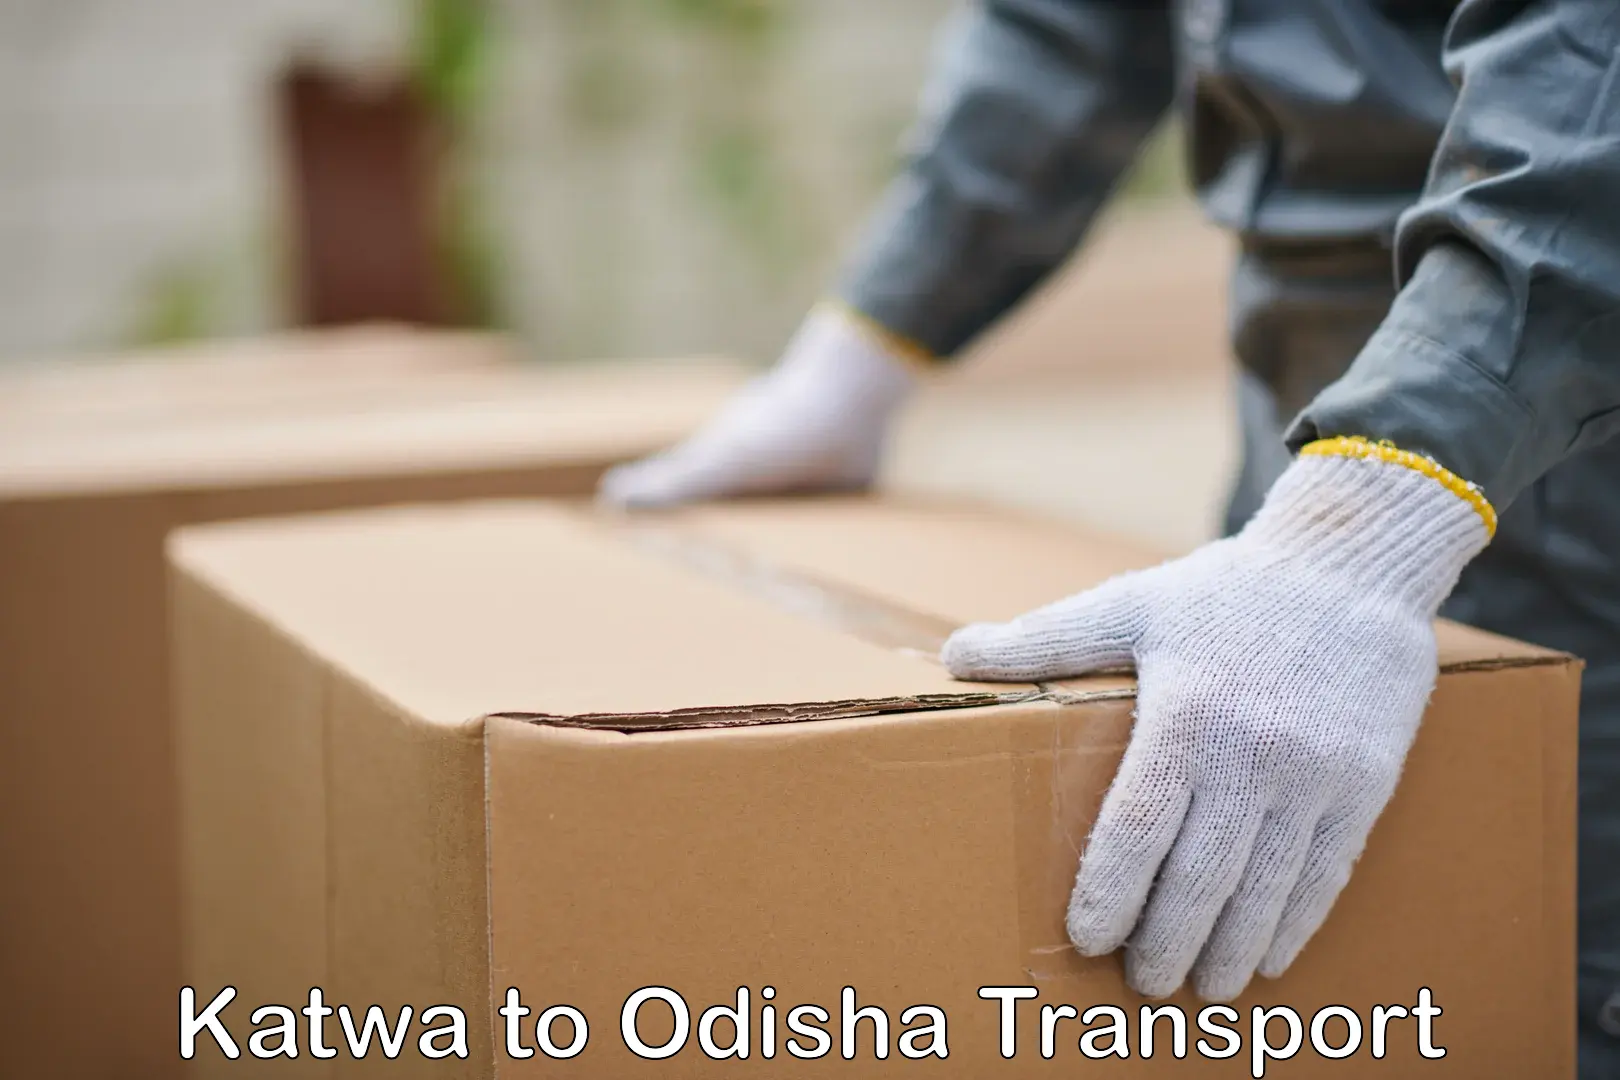 Truck transport companies in India Katwa to Bhuban